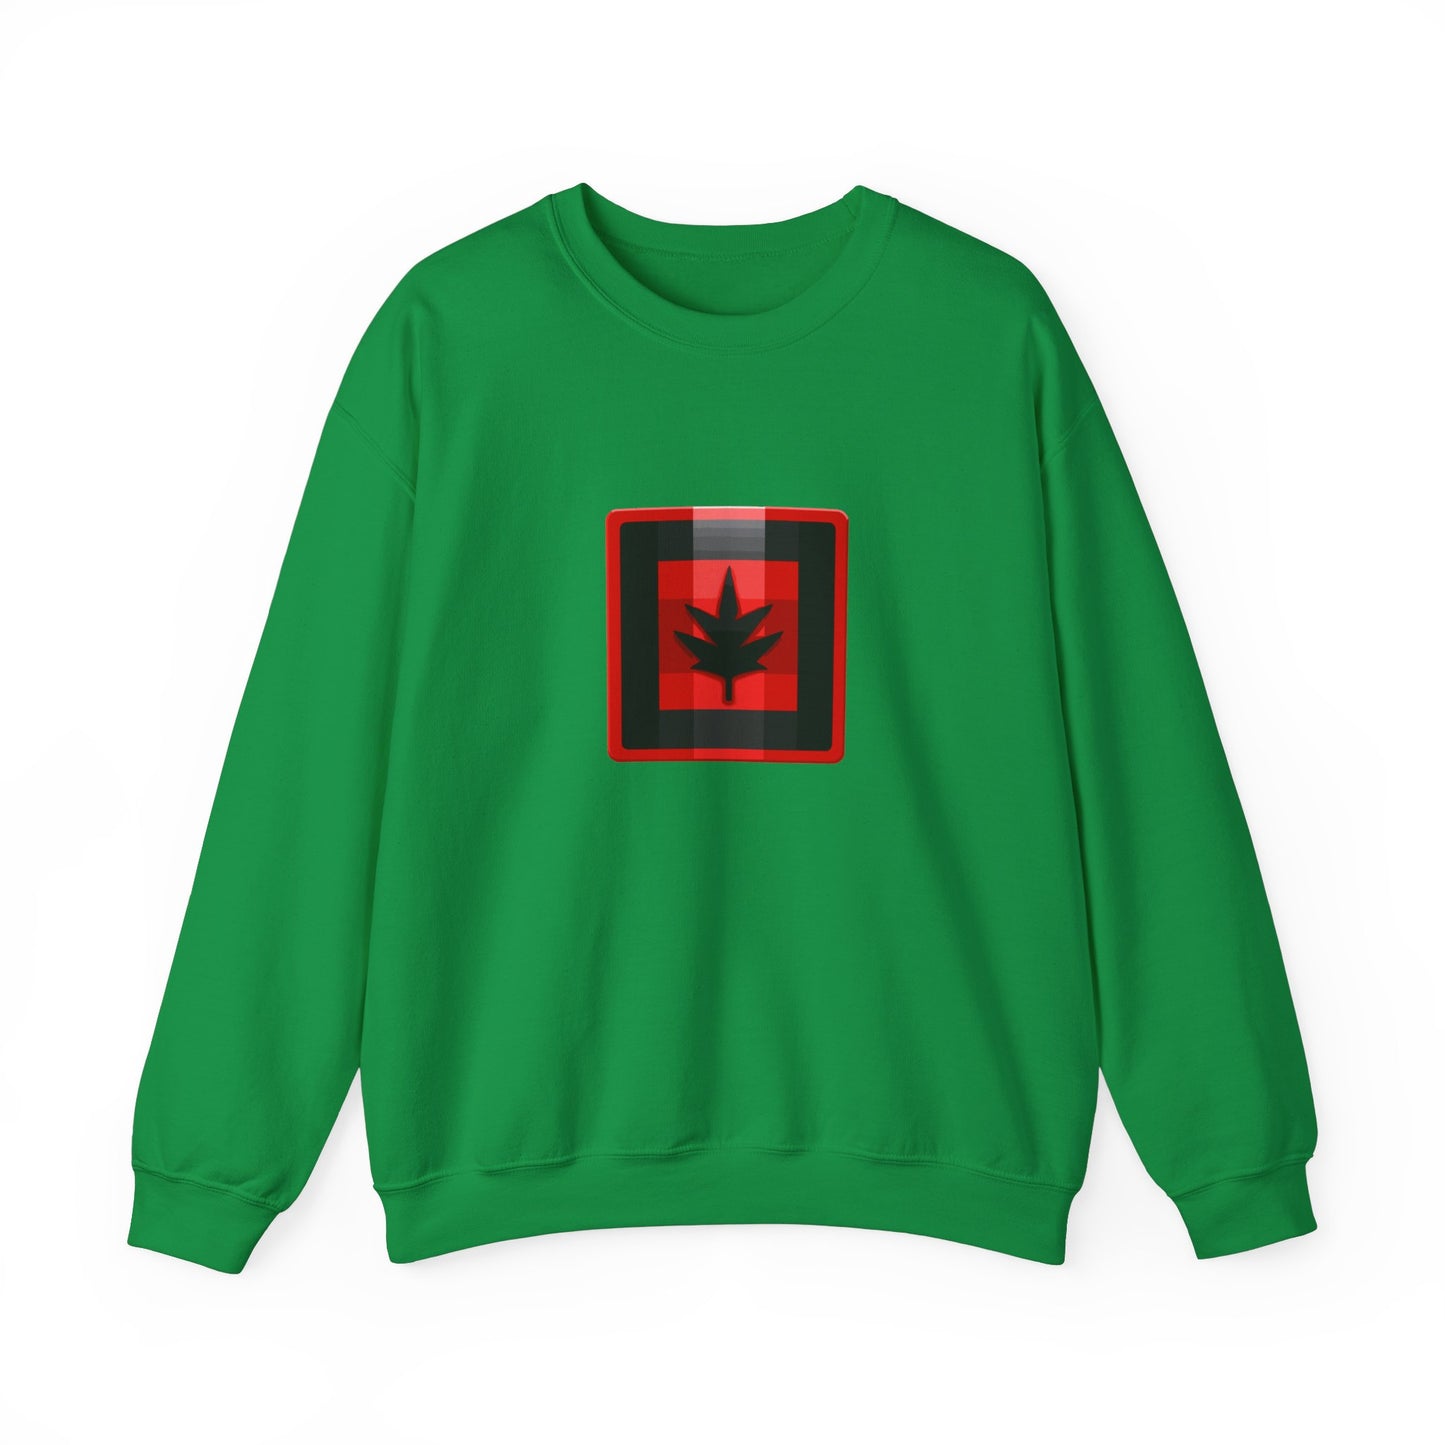 Canada Maple black leaf - Christmas Shirt, Holiday Xmas Shirt, Merry Christmas, Holiday Xmas, Unisex Xmas Shirt, Christmas Sweatshirt, Christmas Apparel, Xmas Celebration Shirt, Matching Family Outfits, Christmas Gifts